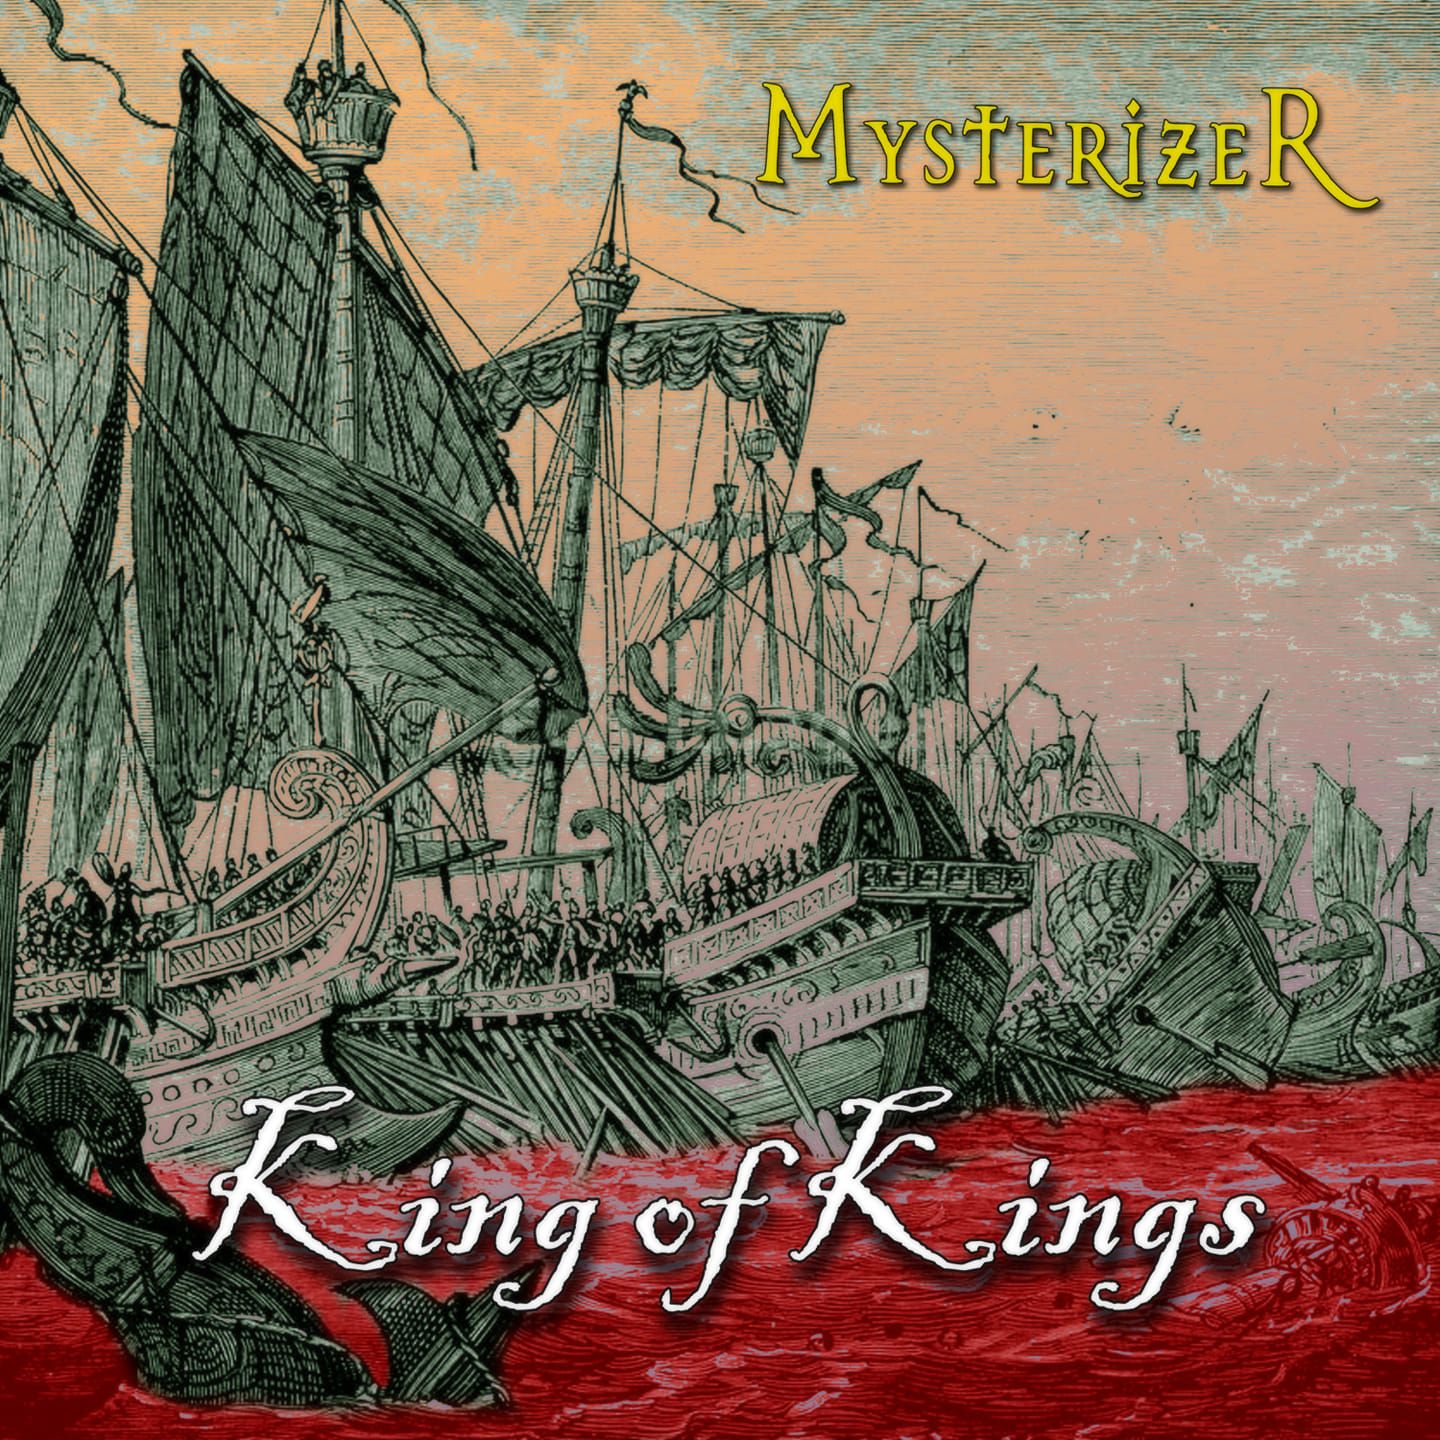 Mysterizer - King of Kings (clip)